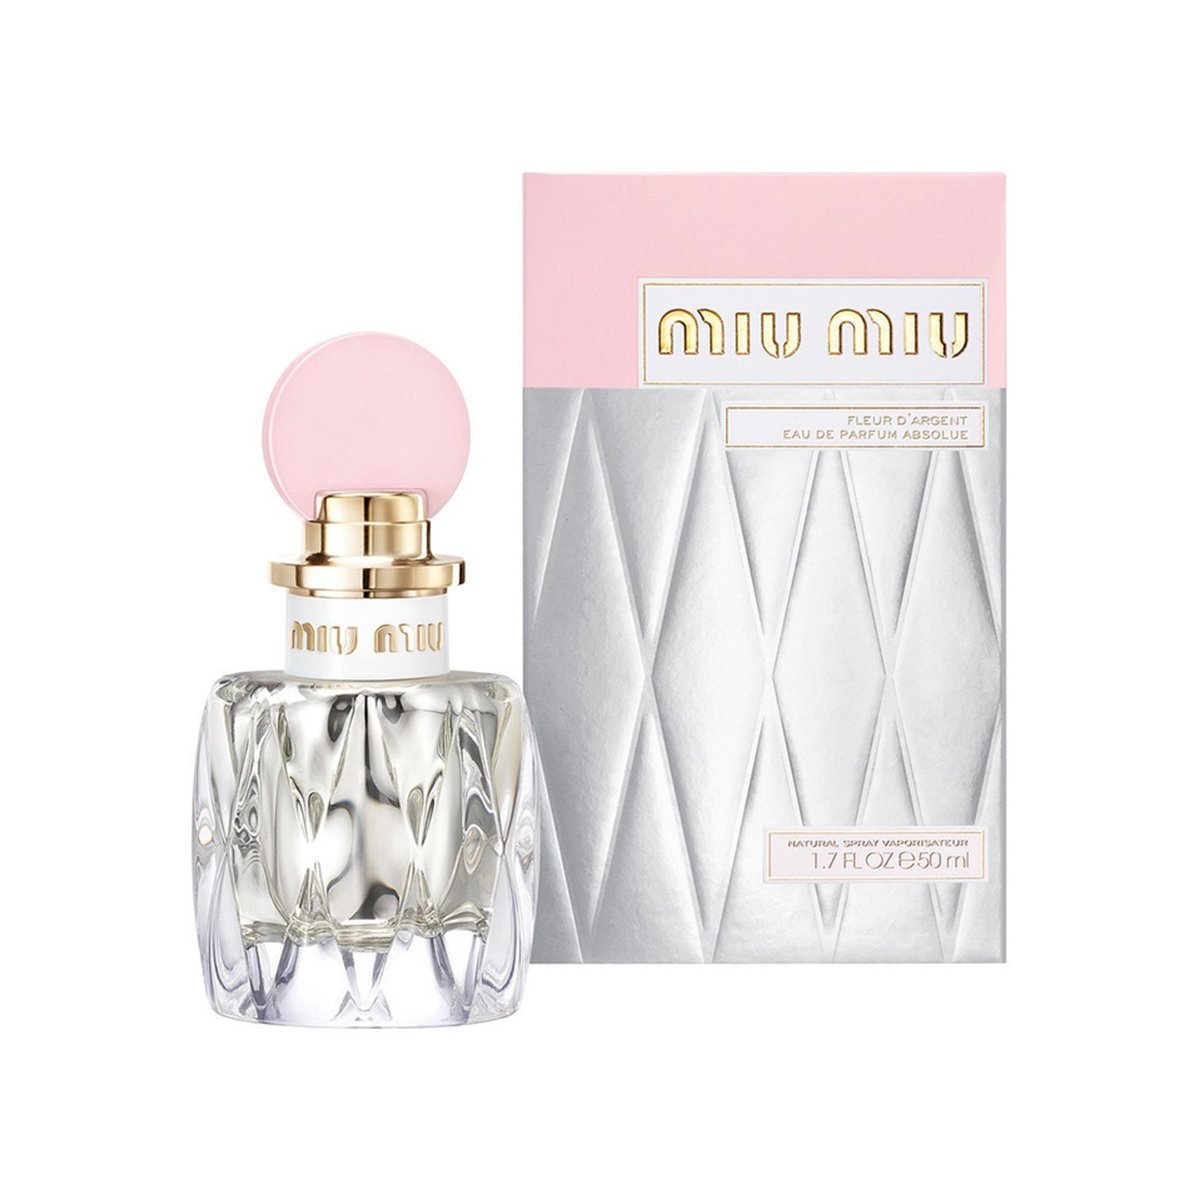 Miu Miu Fleur d'Argent EDP Absolue - My Perfume Shop Australia